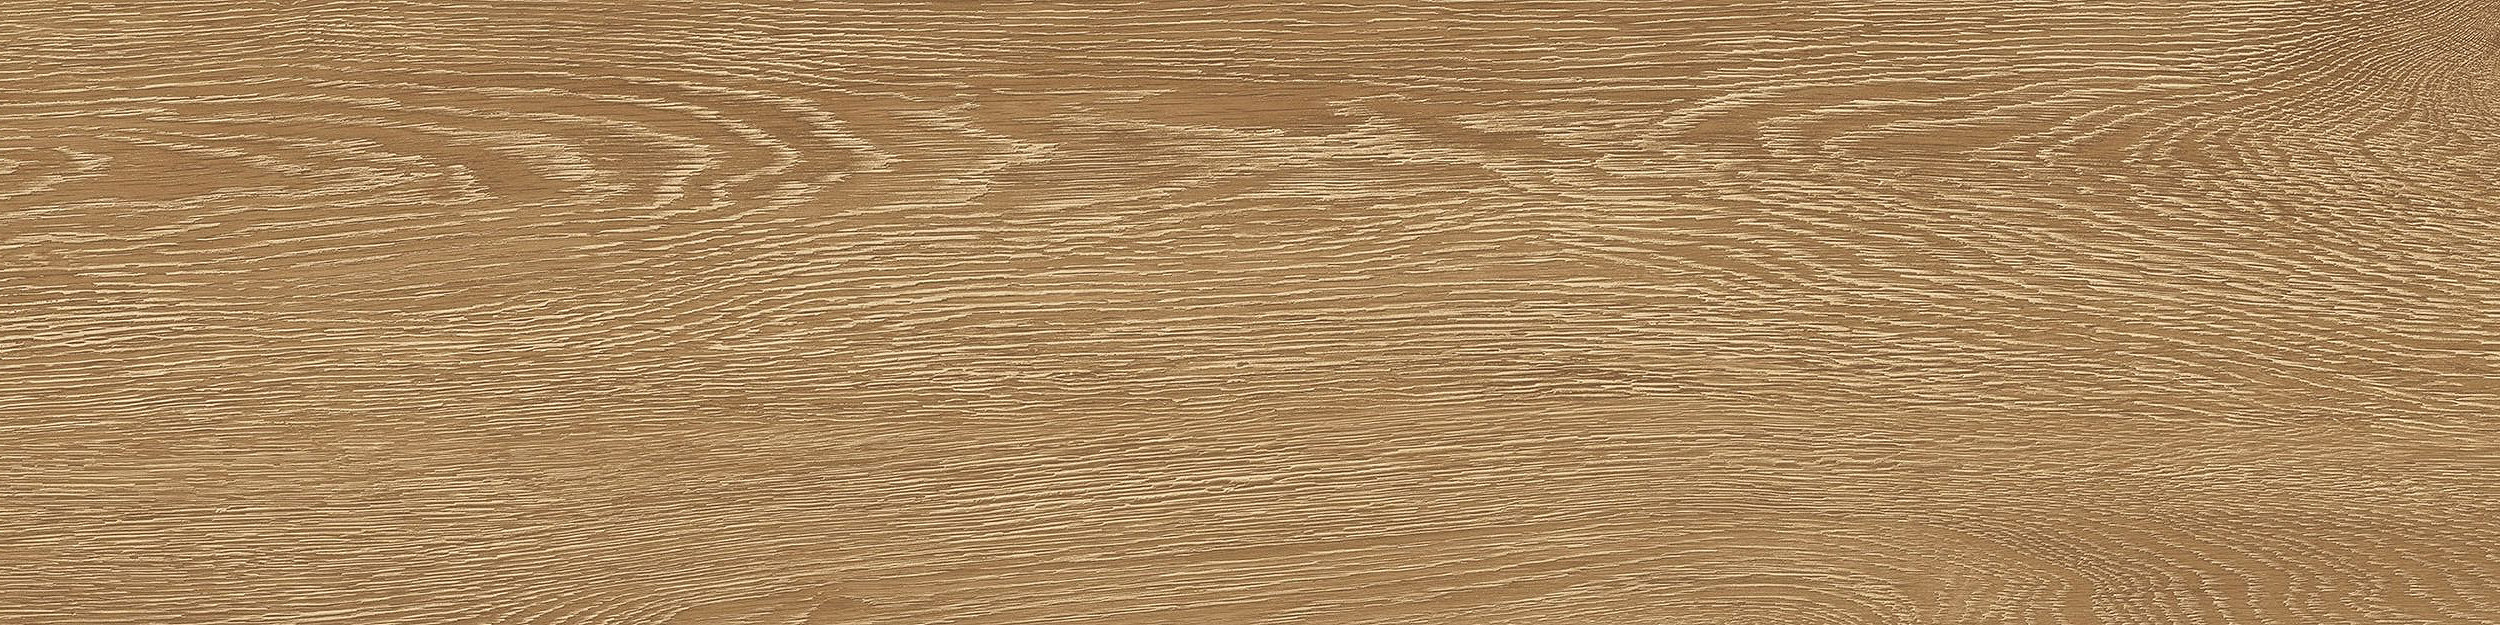 Textured Woodgrains LVT In Antique Oak afbeeldingnummer 11